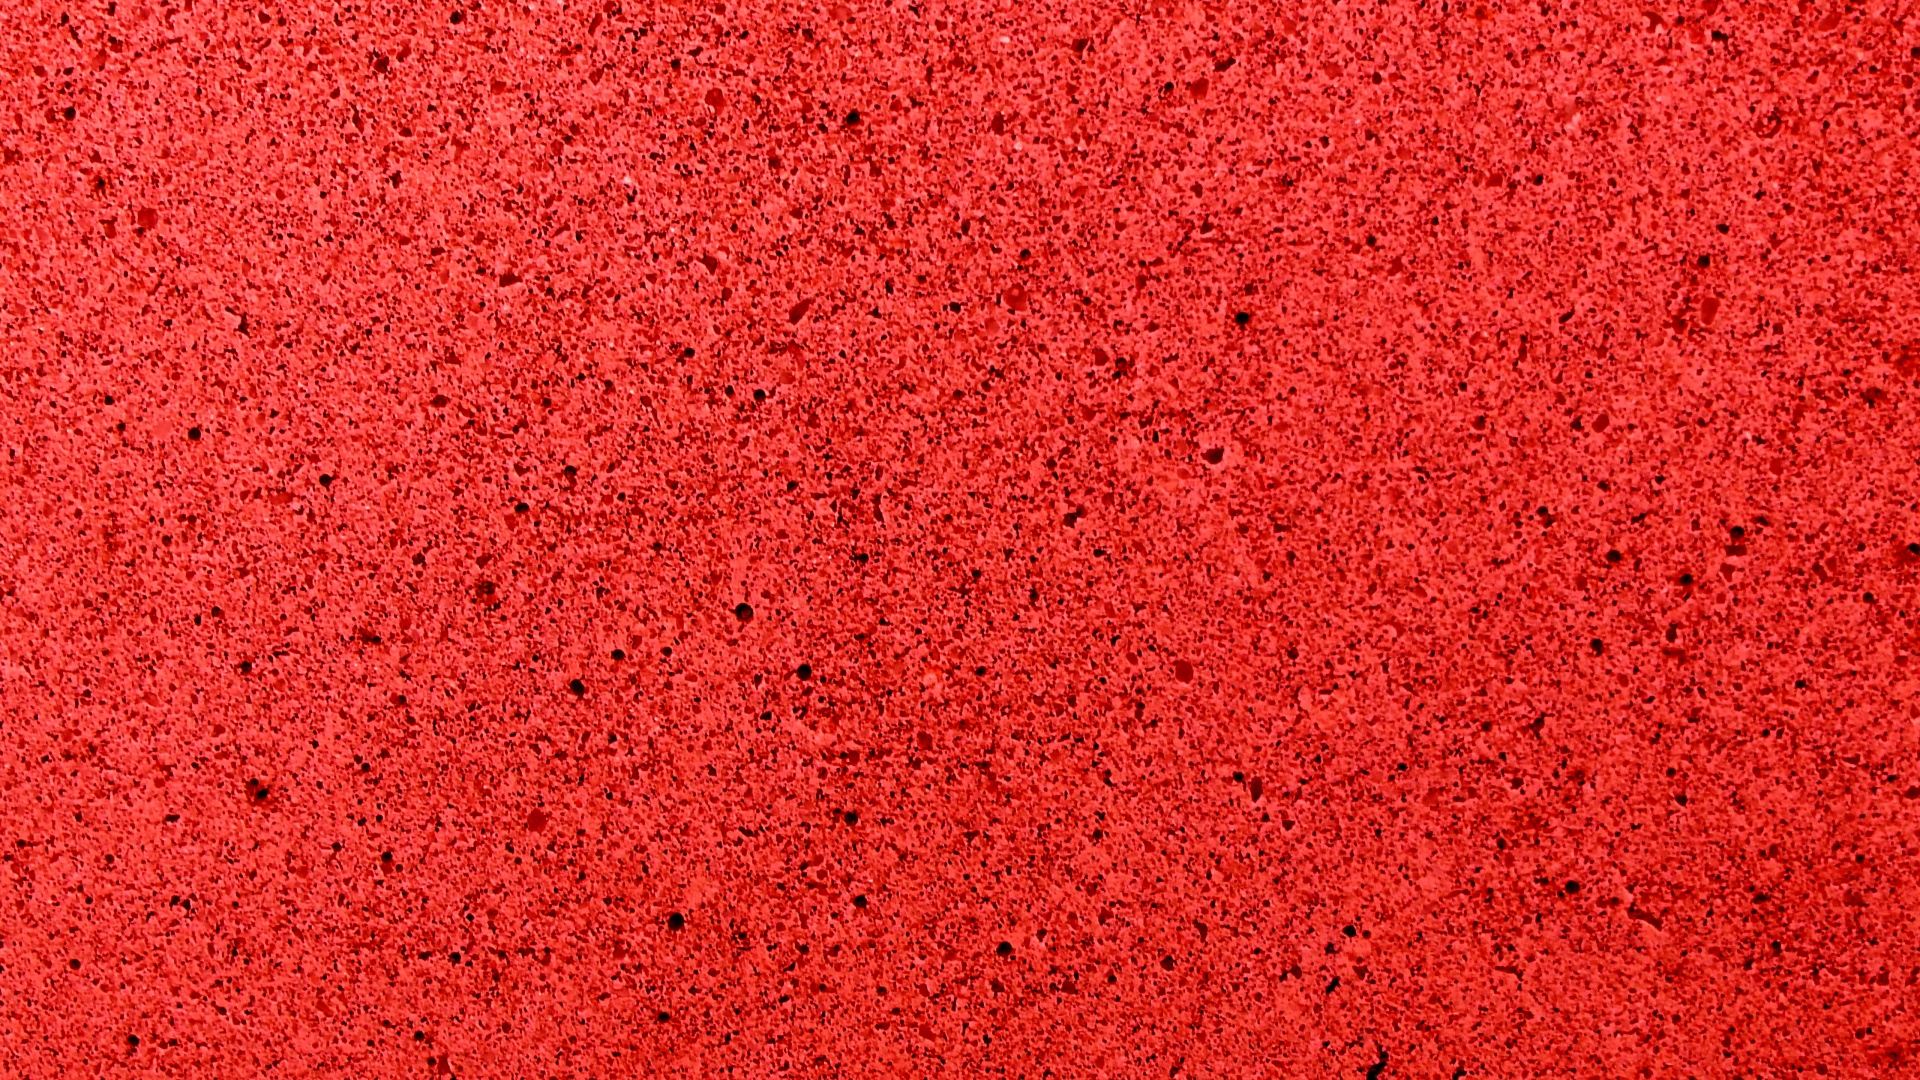 Red Speckled Background